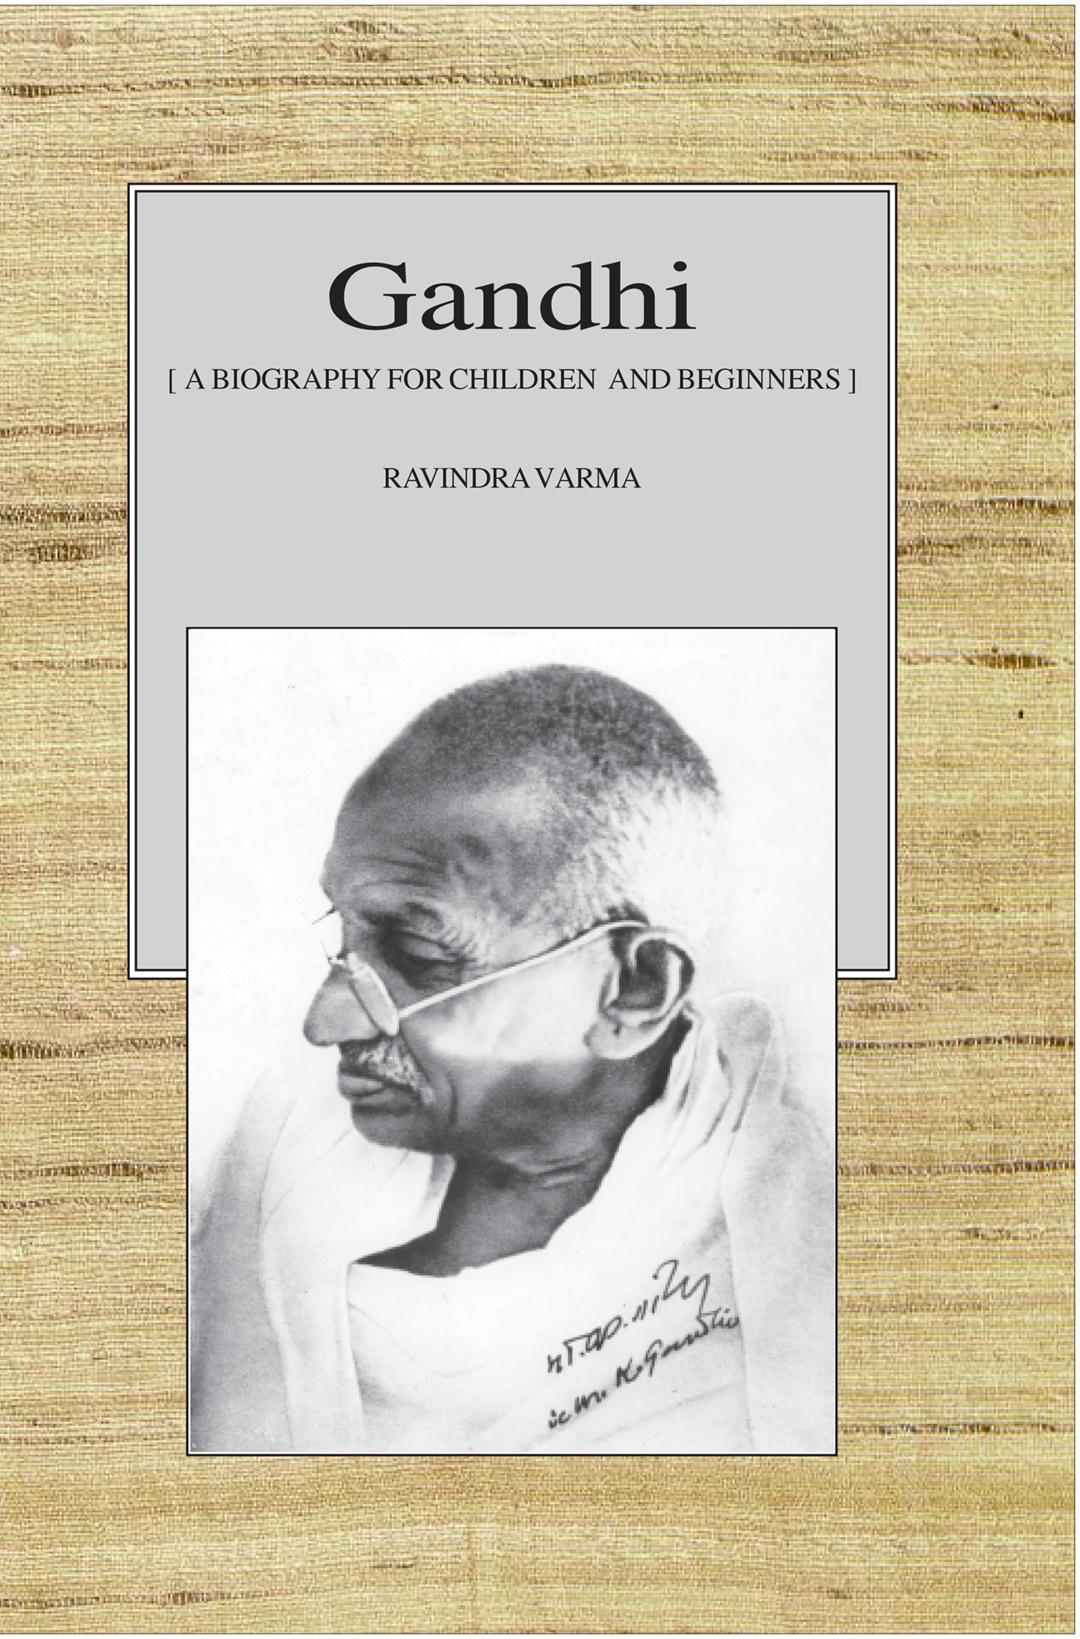 autobiography of mahatma gandhi in marathi